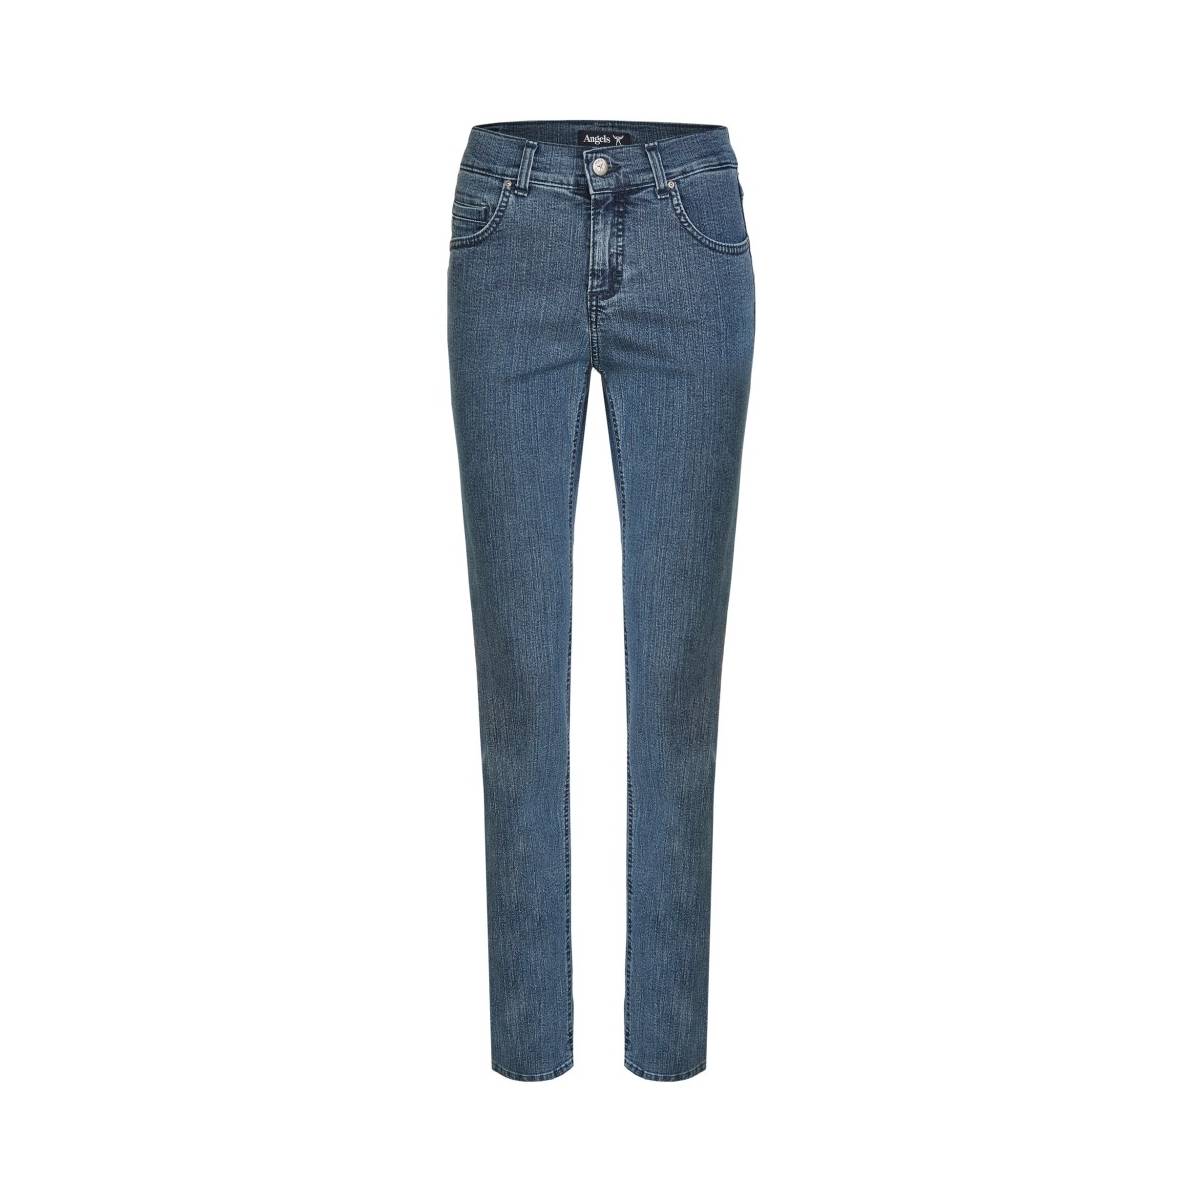 Natuur beklimmen Guinness ANGELS broeken jeans - model cici/5334 - Dameskleding broeken jeans